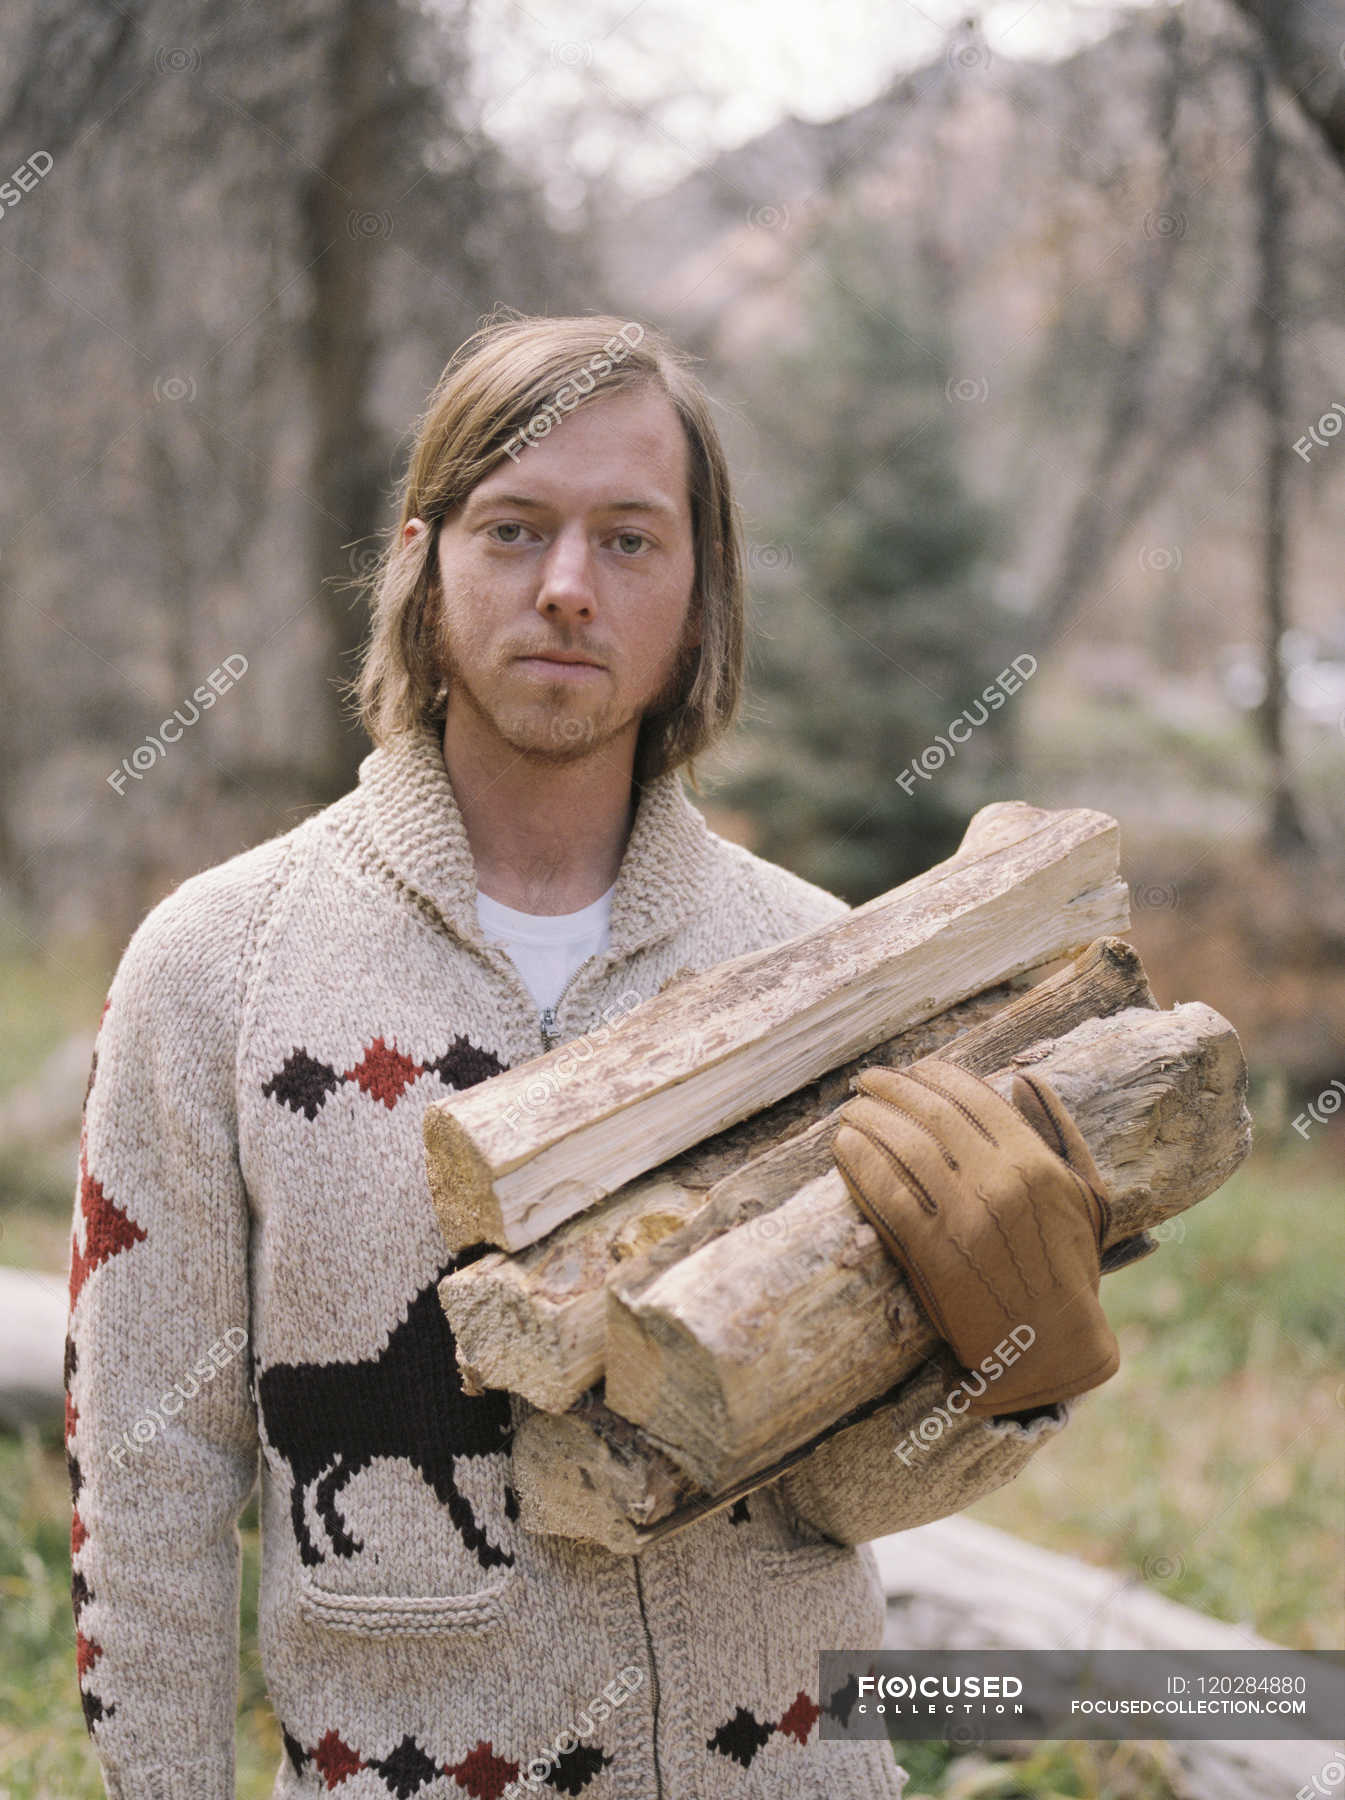 Man carrying firewood — Stock Photo | #120284880